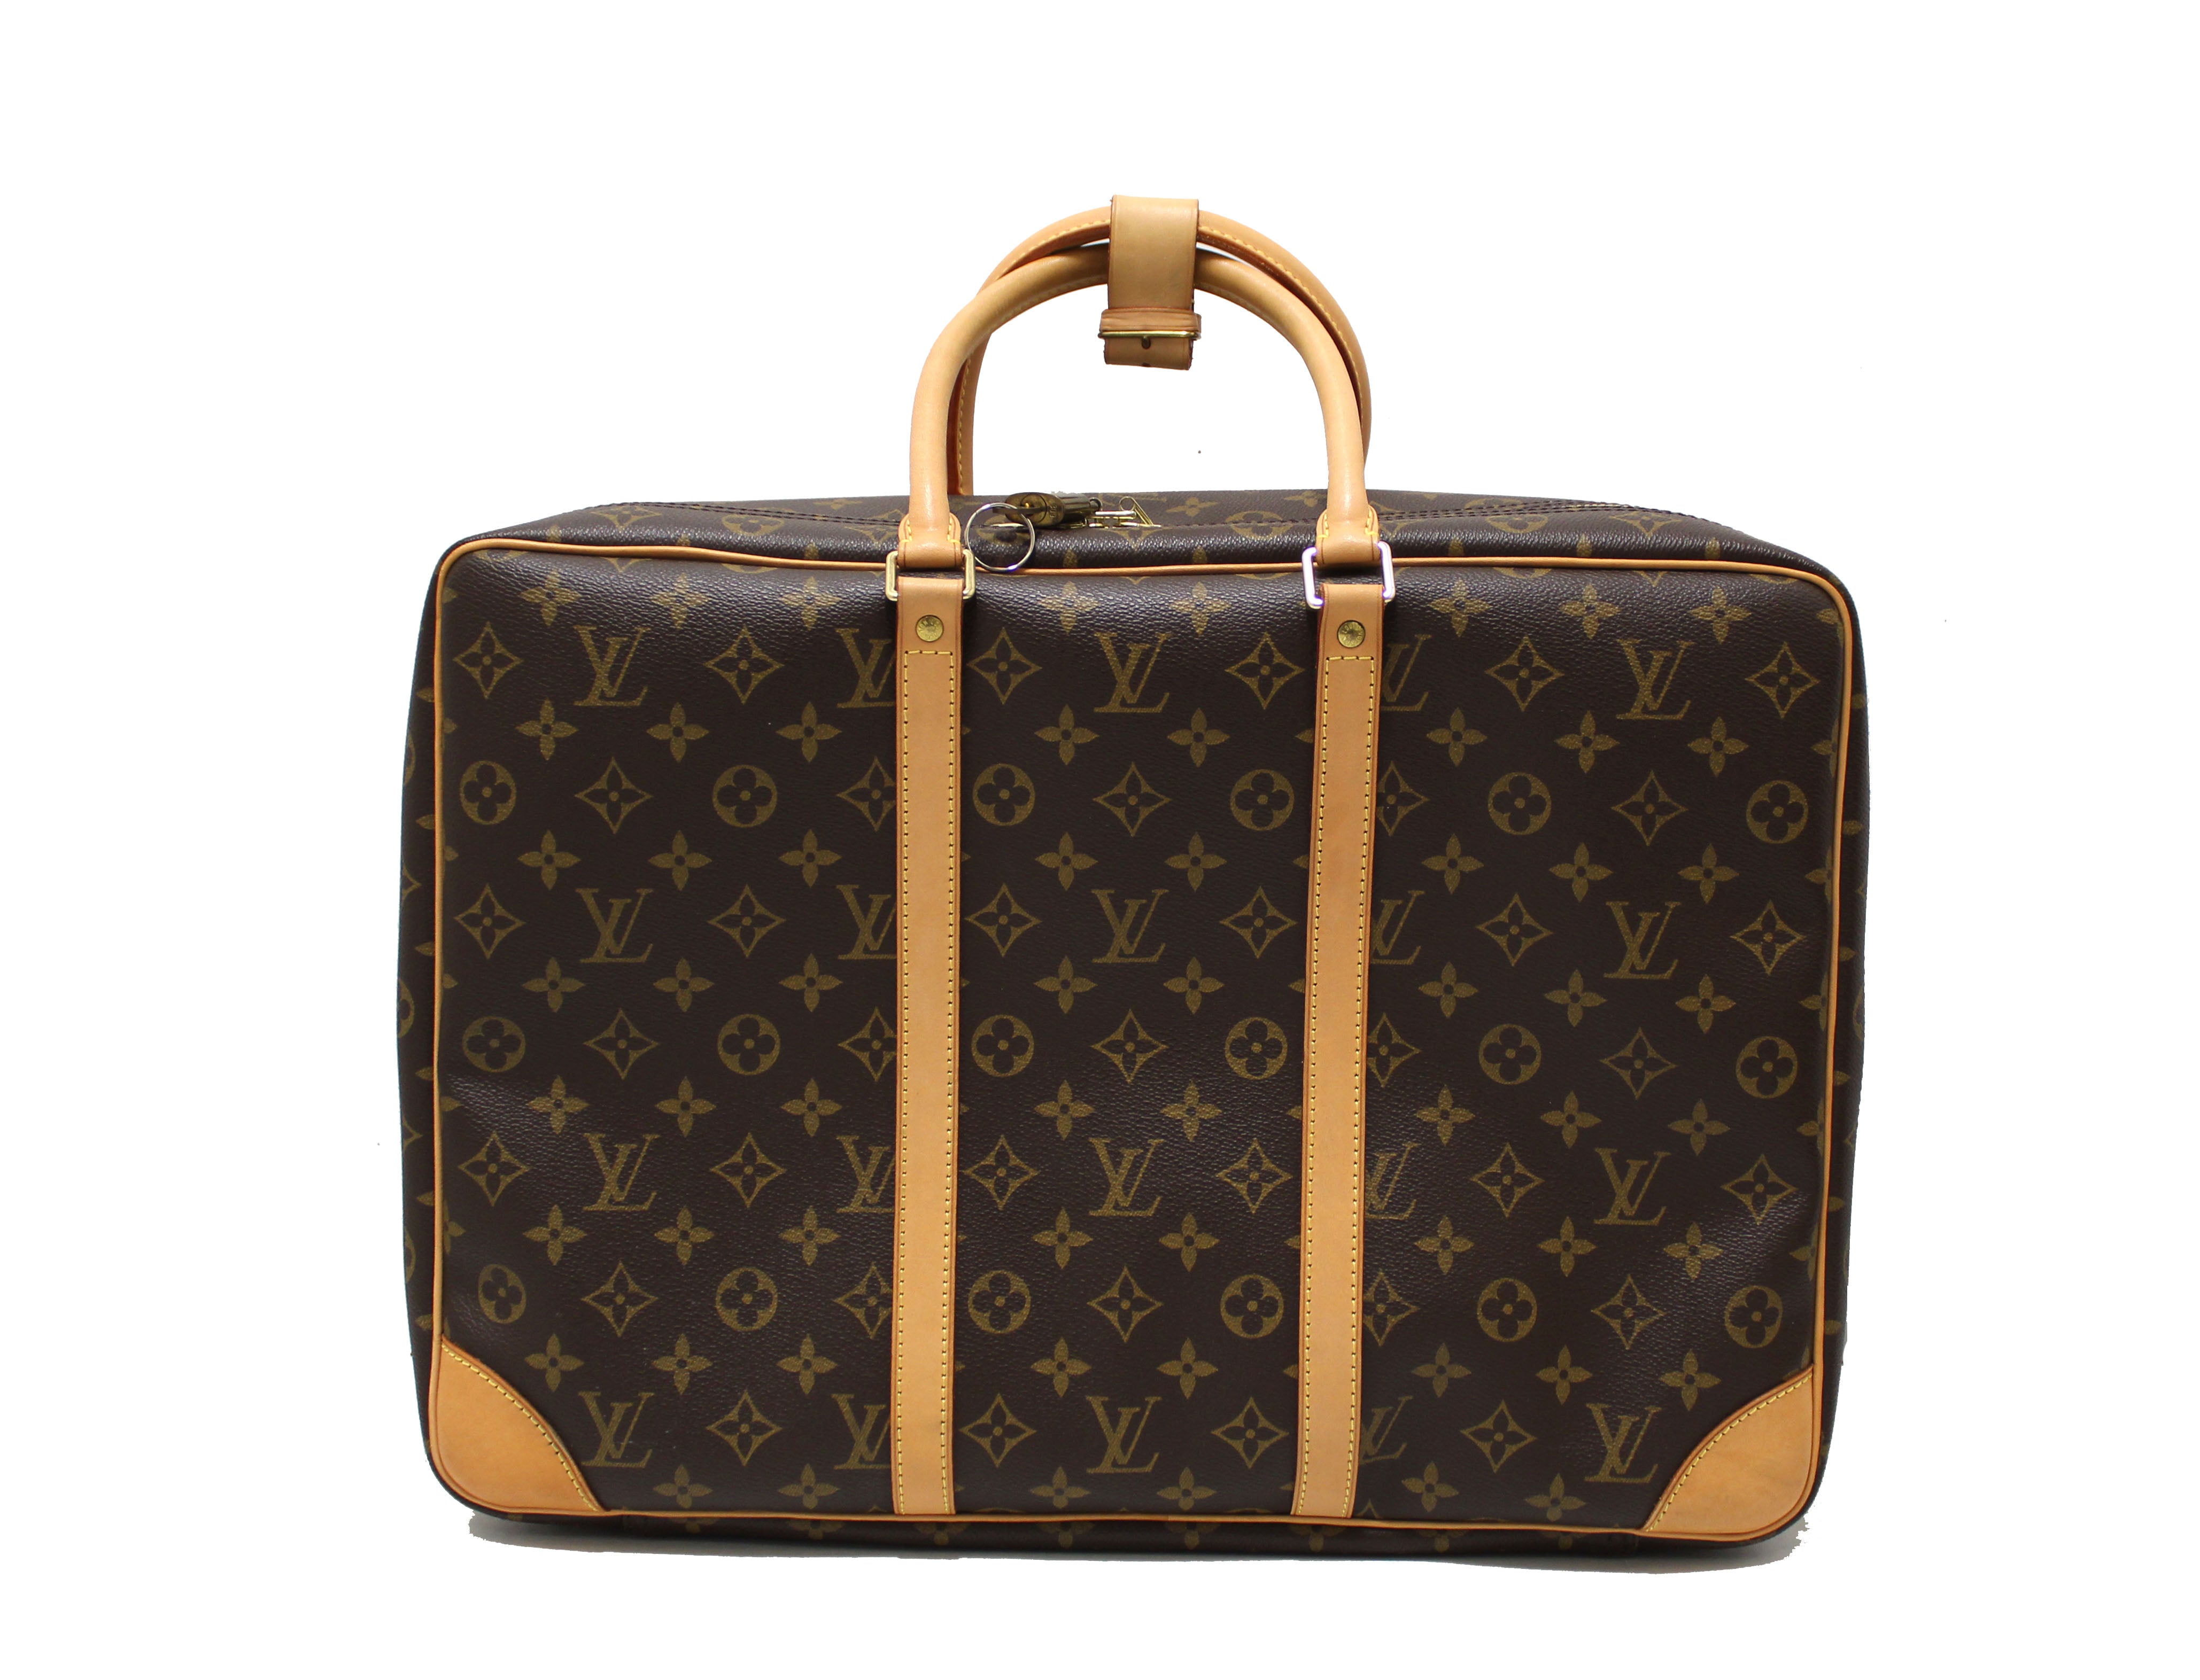 Shop Louis Vuitton Luggage & Travel Bags